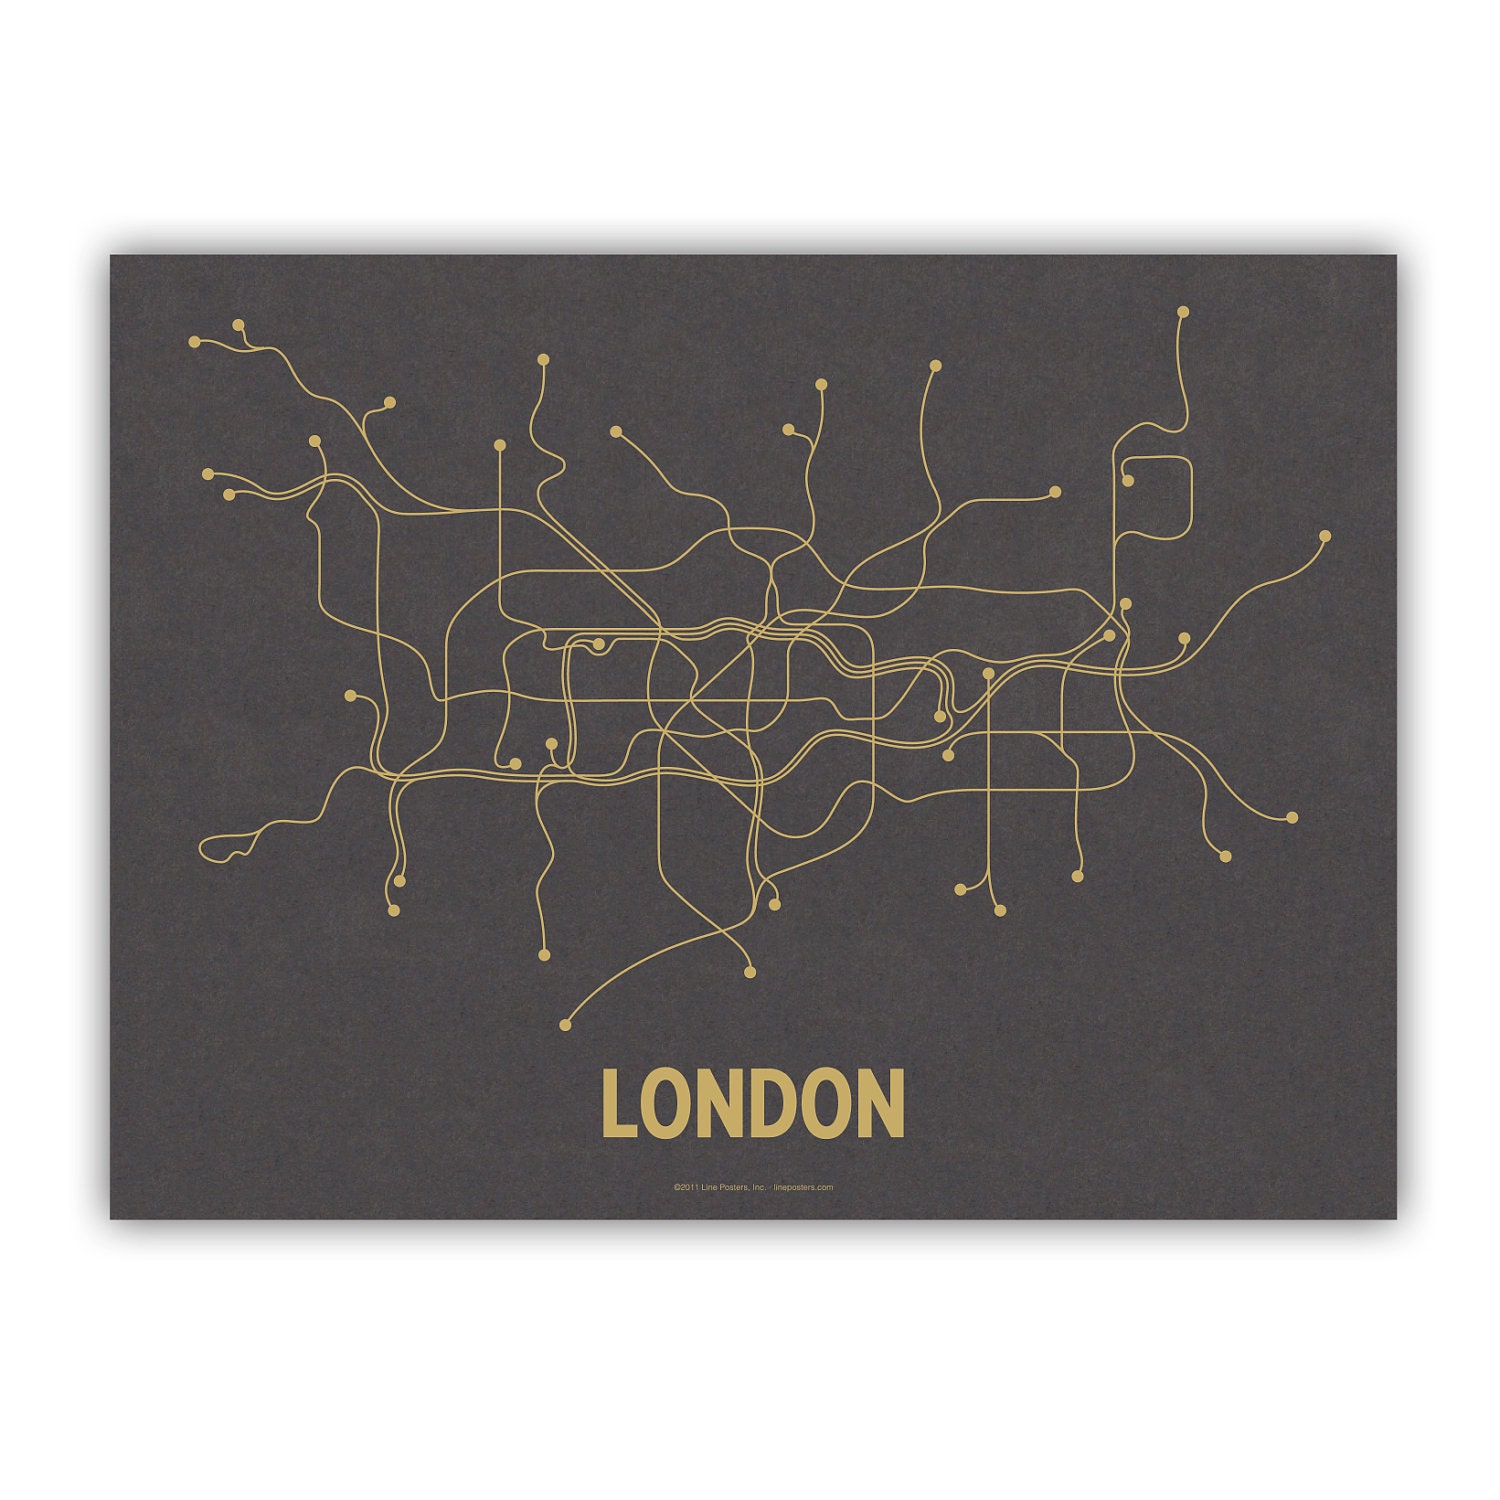 London Lineposter Screen Print - Steel Gray/Mustard